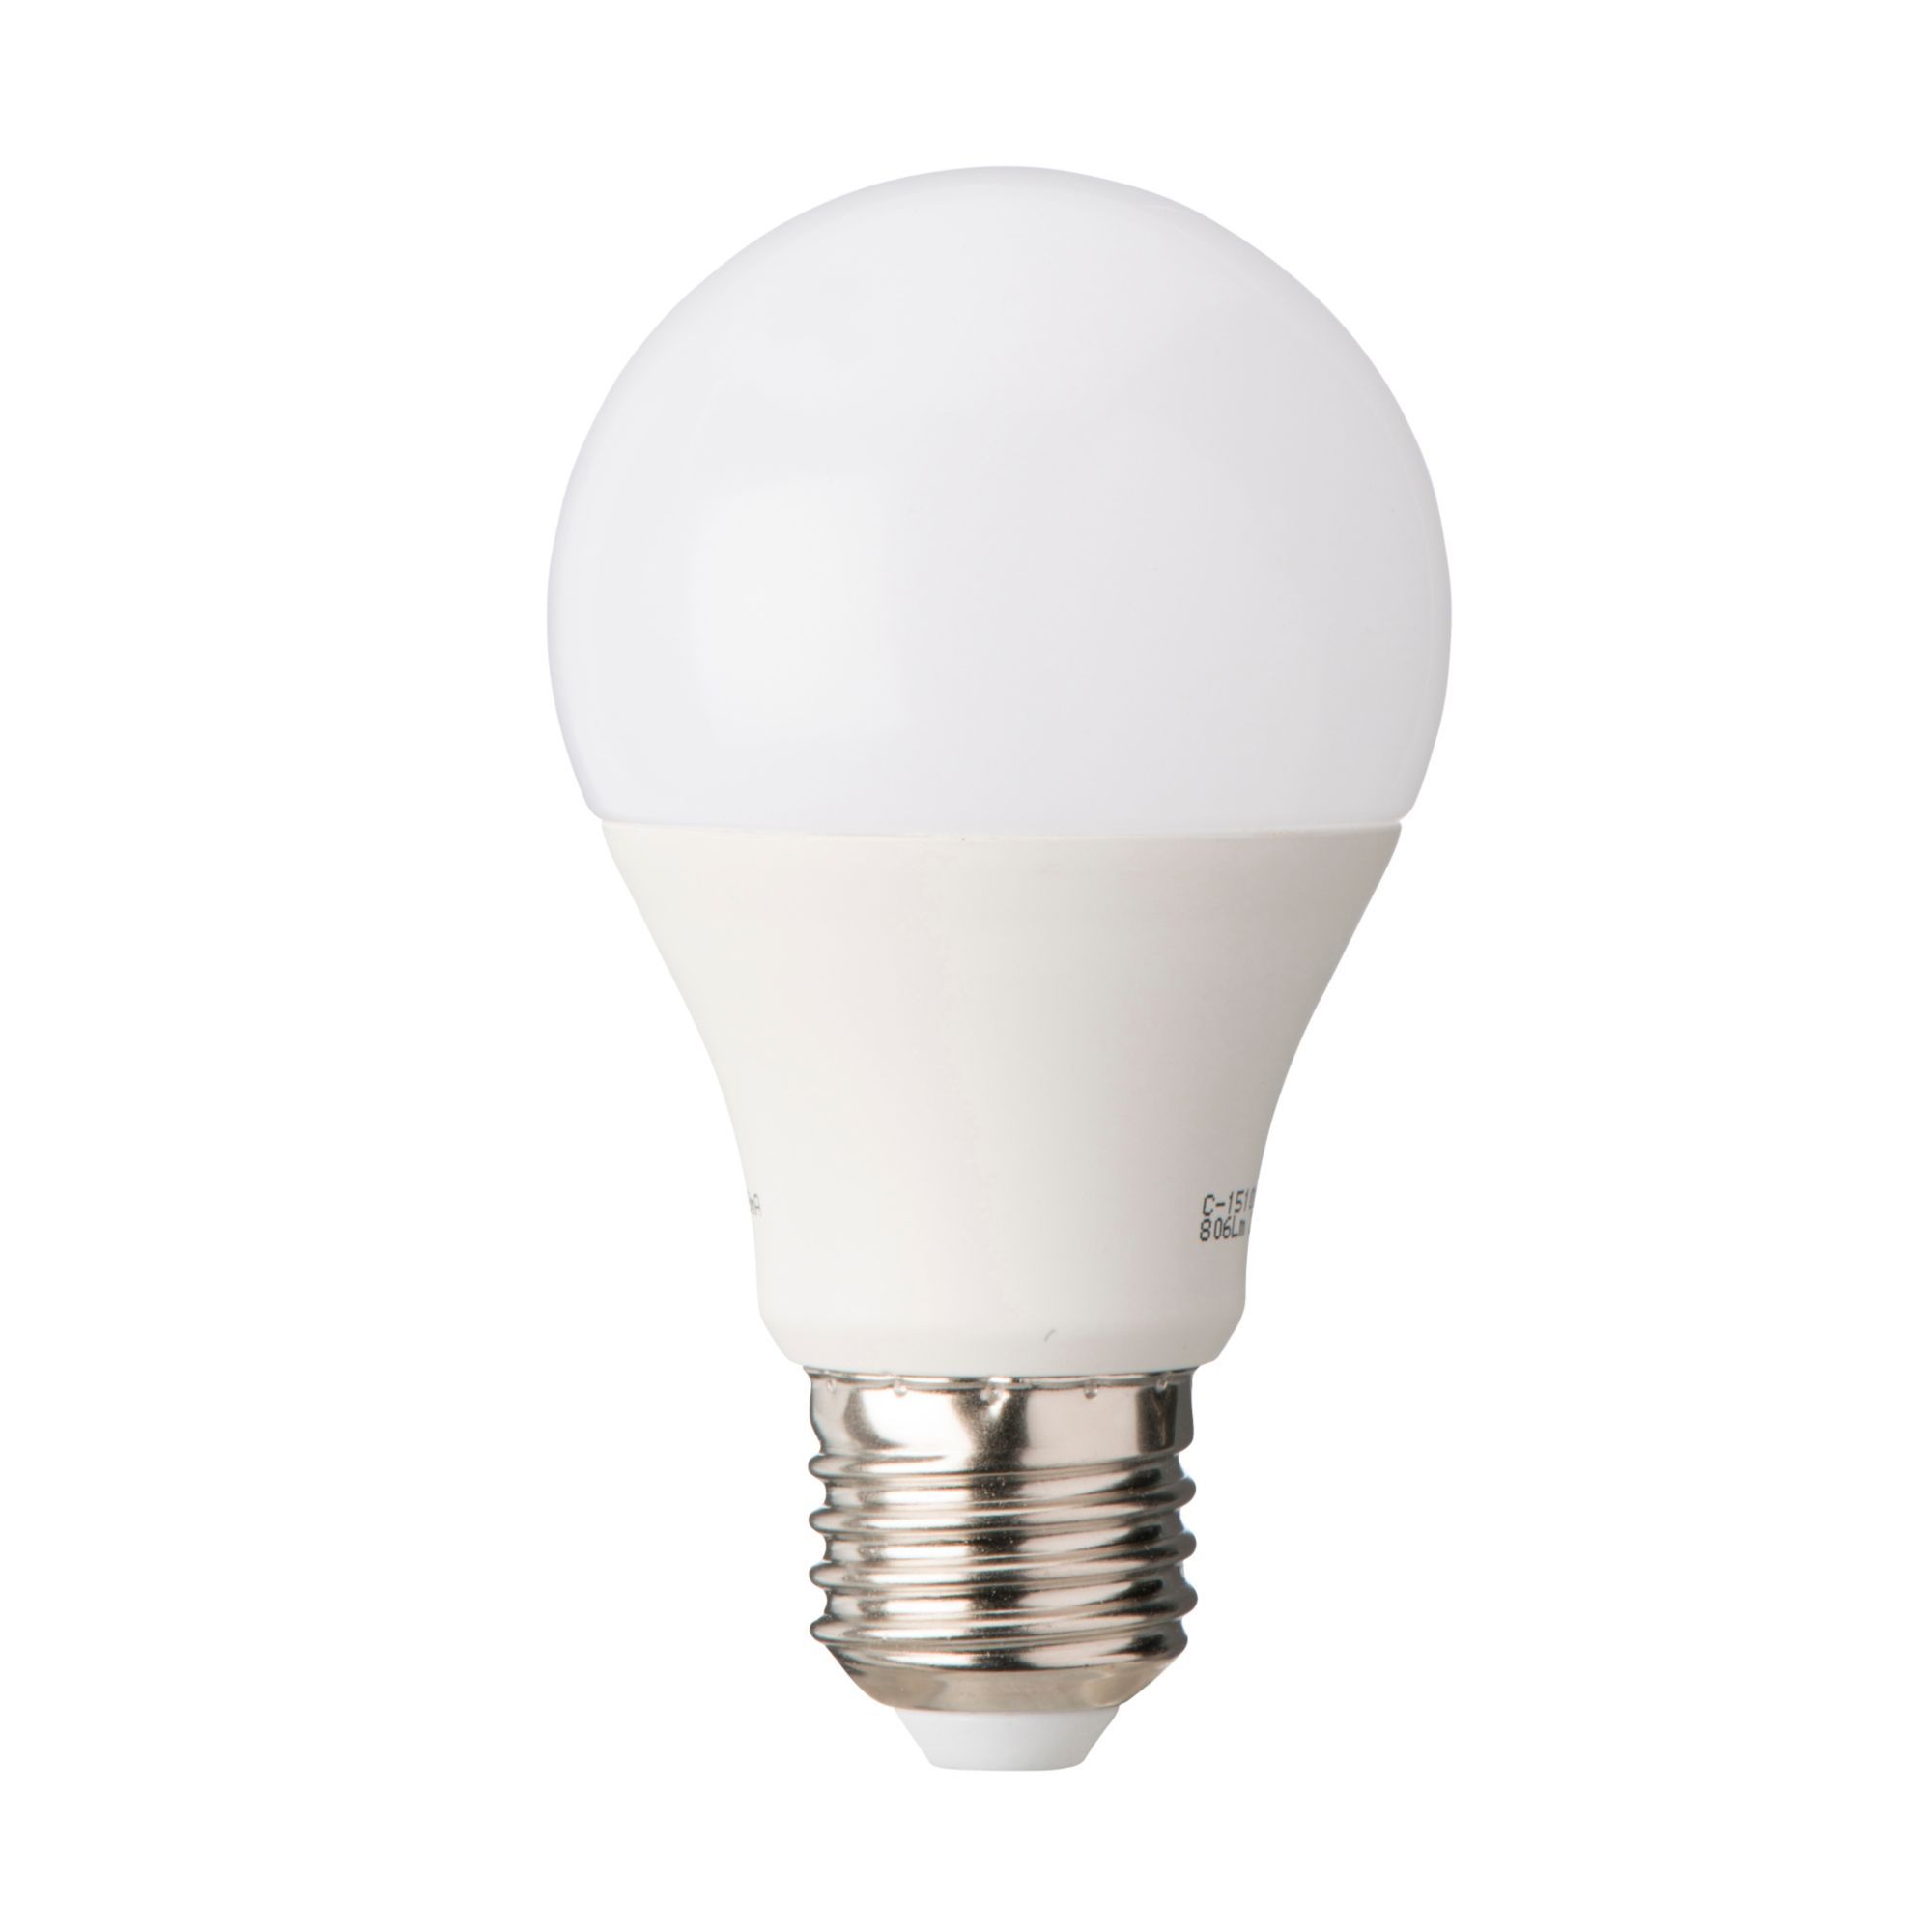 Diall E27 LED Classic Light bulb | Departments | DIY at B&Q